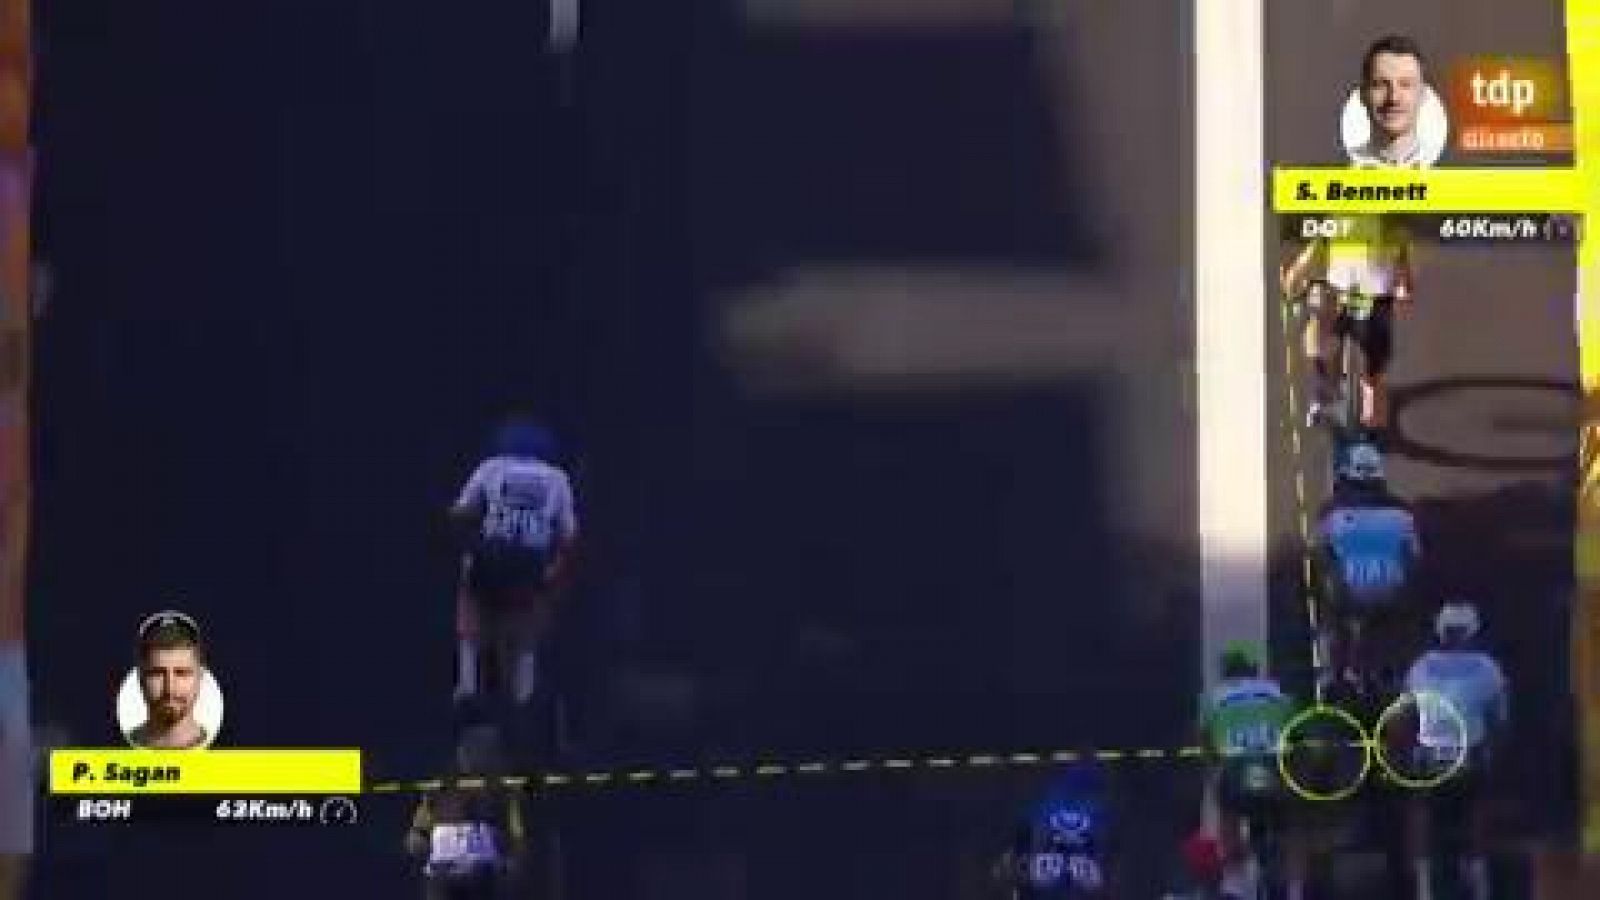 Etapa 11 del Tour de Francia | Sagan sancionado por golpear a Van Aert en el 'sprint'